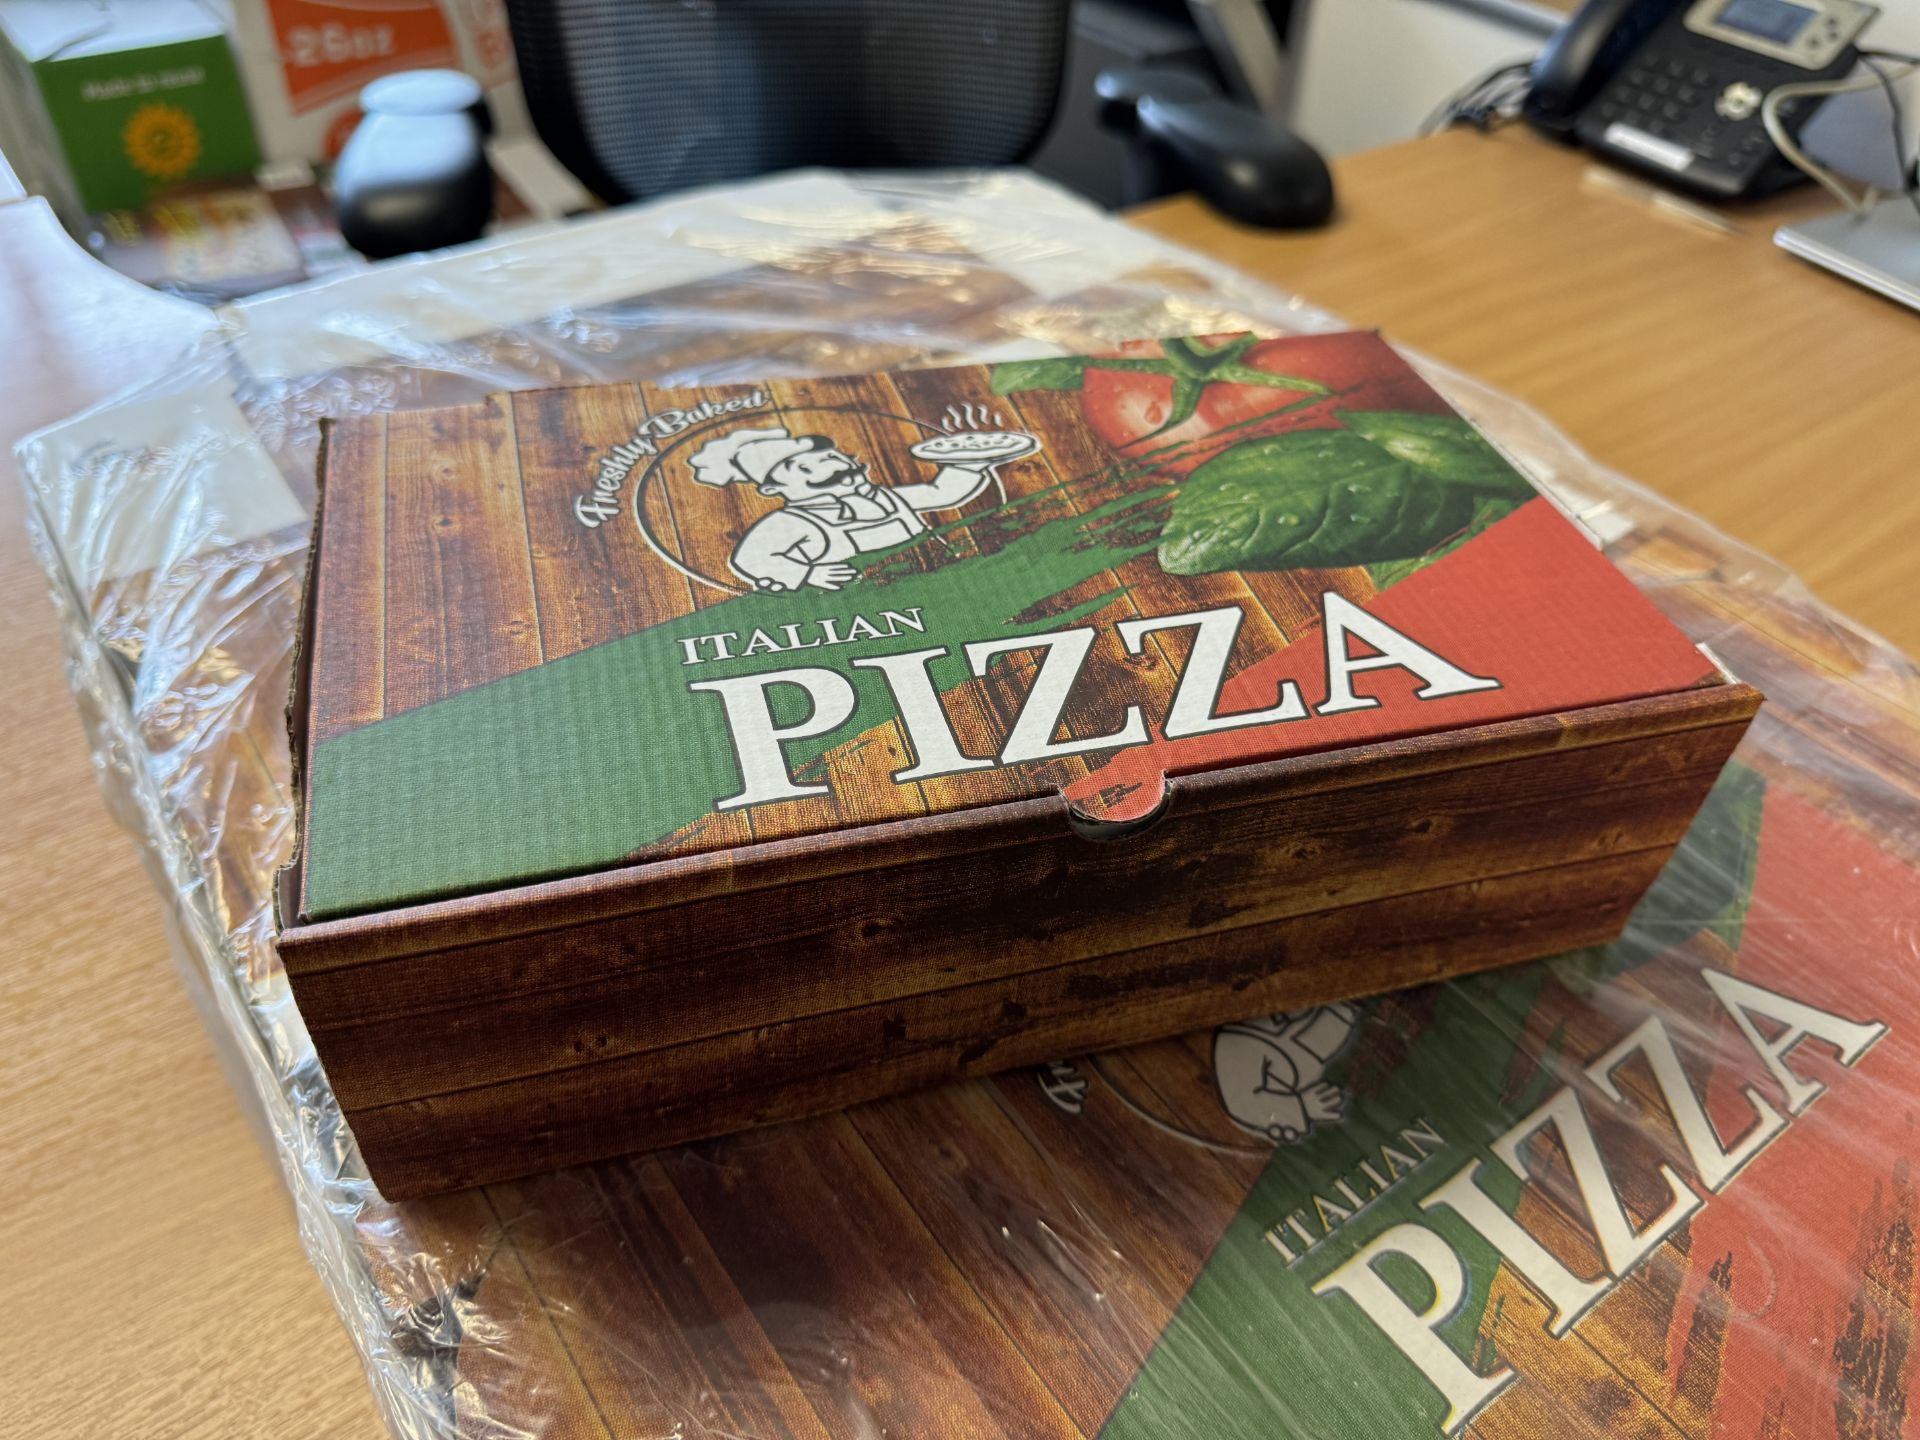 Circa 900 - Italian Pizza Calzone Boxes (Cardboard) - Multiple Uses RRP £130